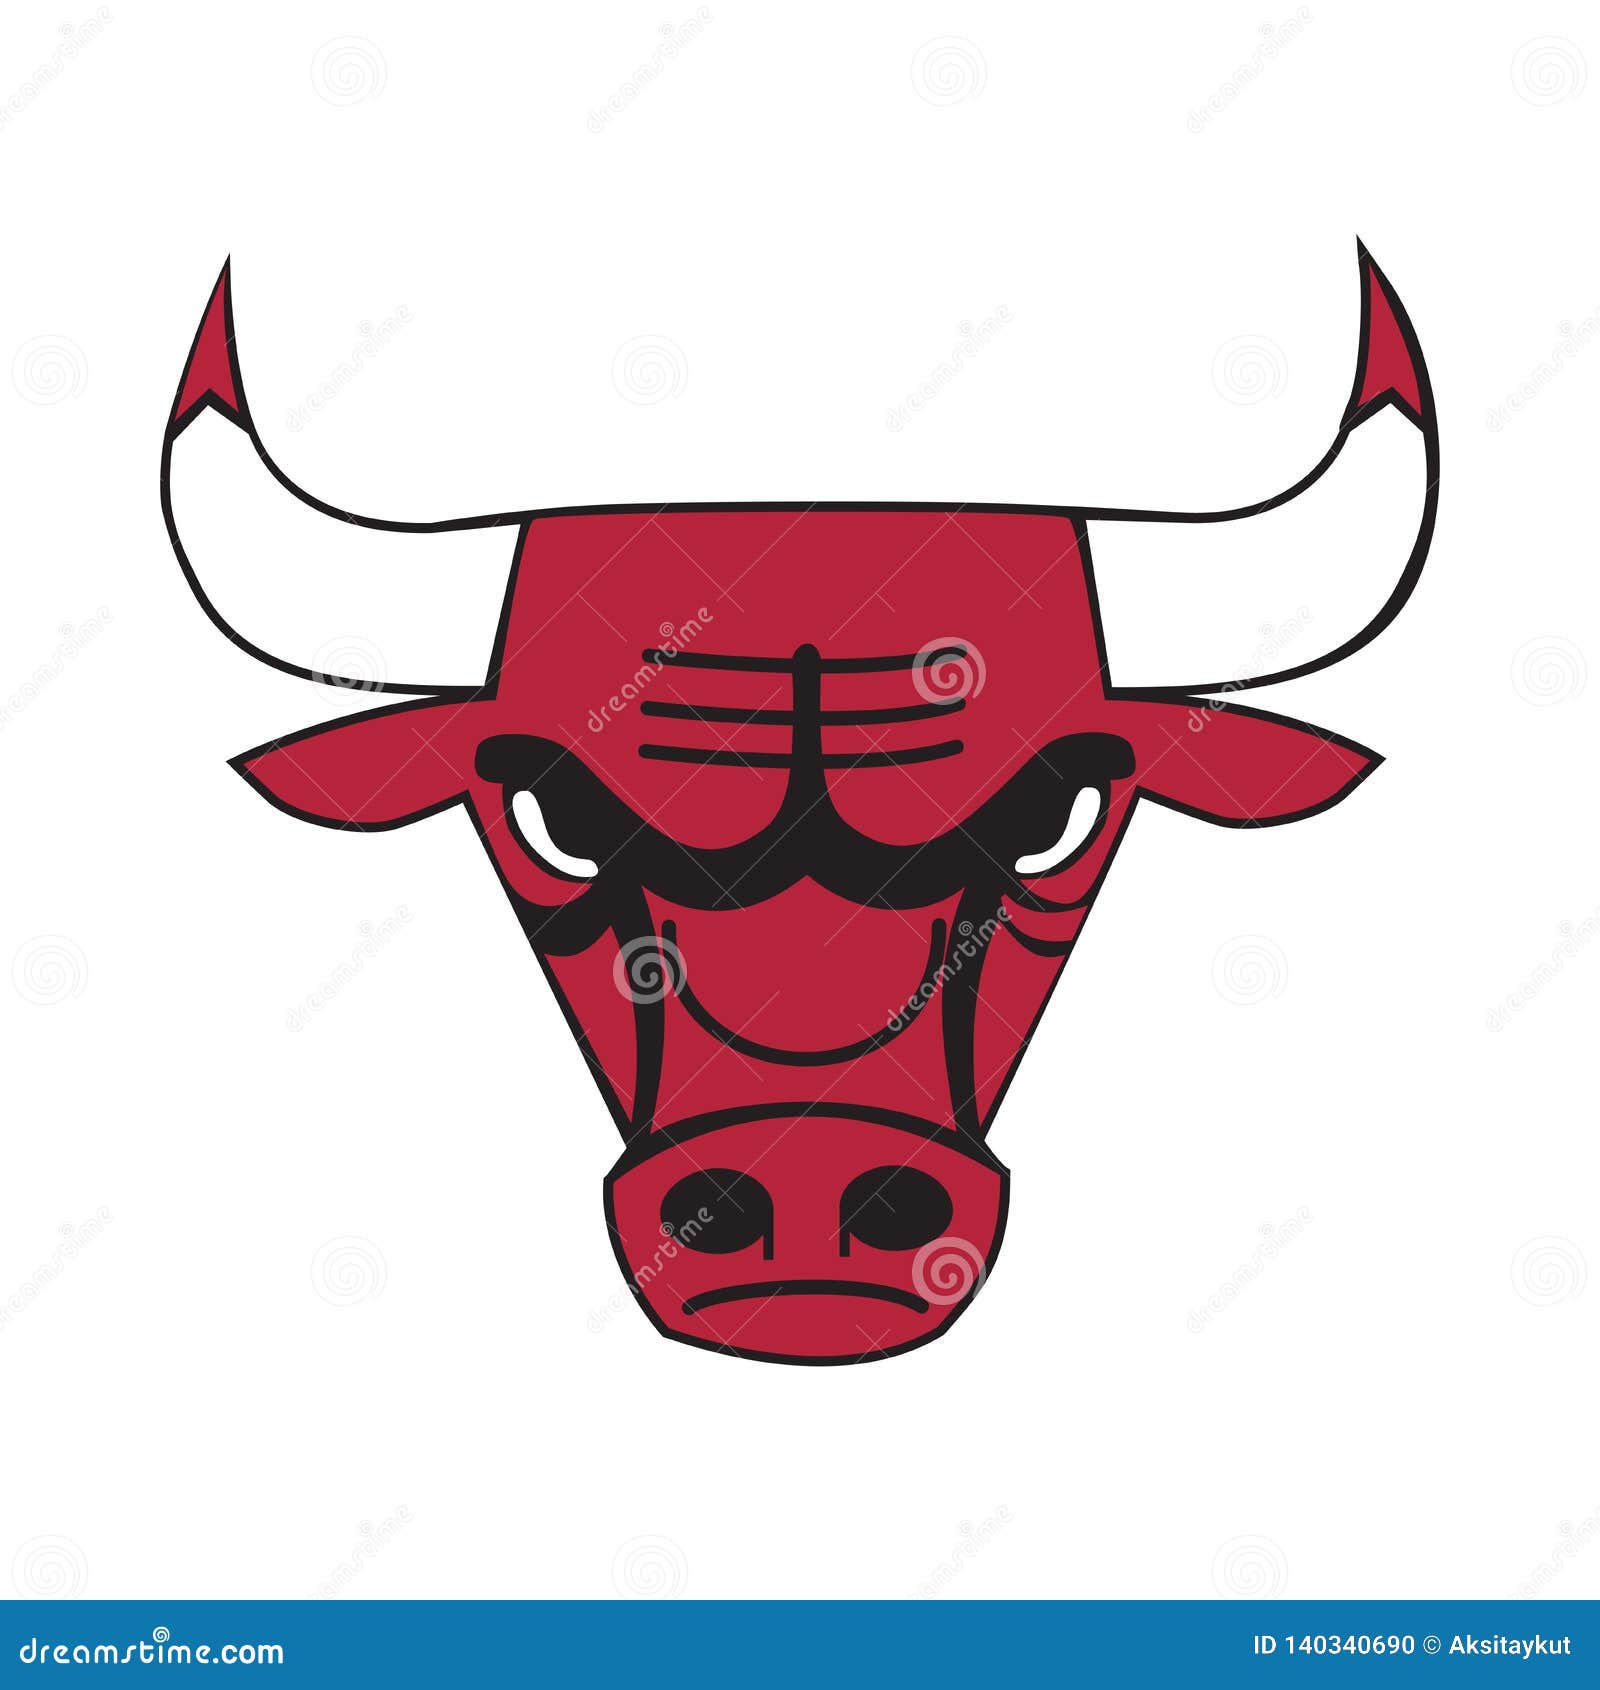 Chicago Bulls socks editorial stock image. Illustration of clothing -  255289224